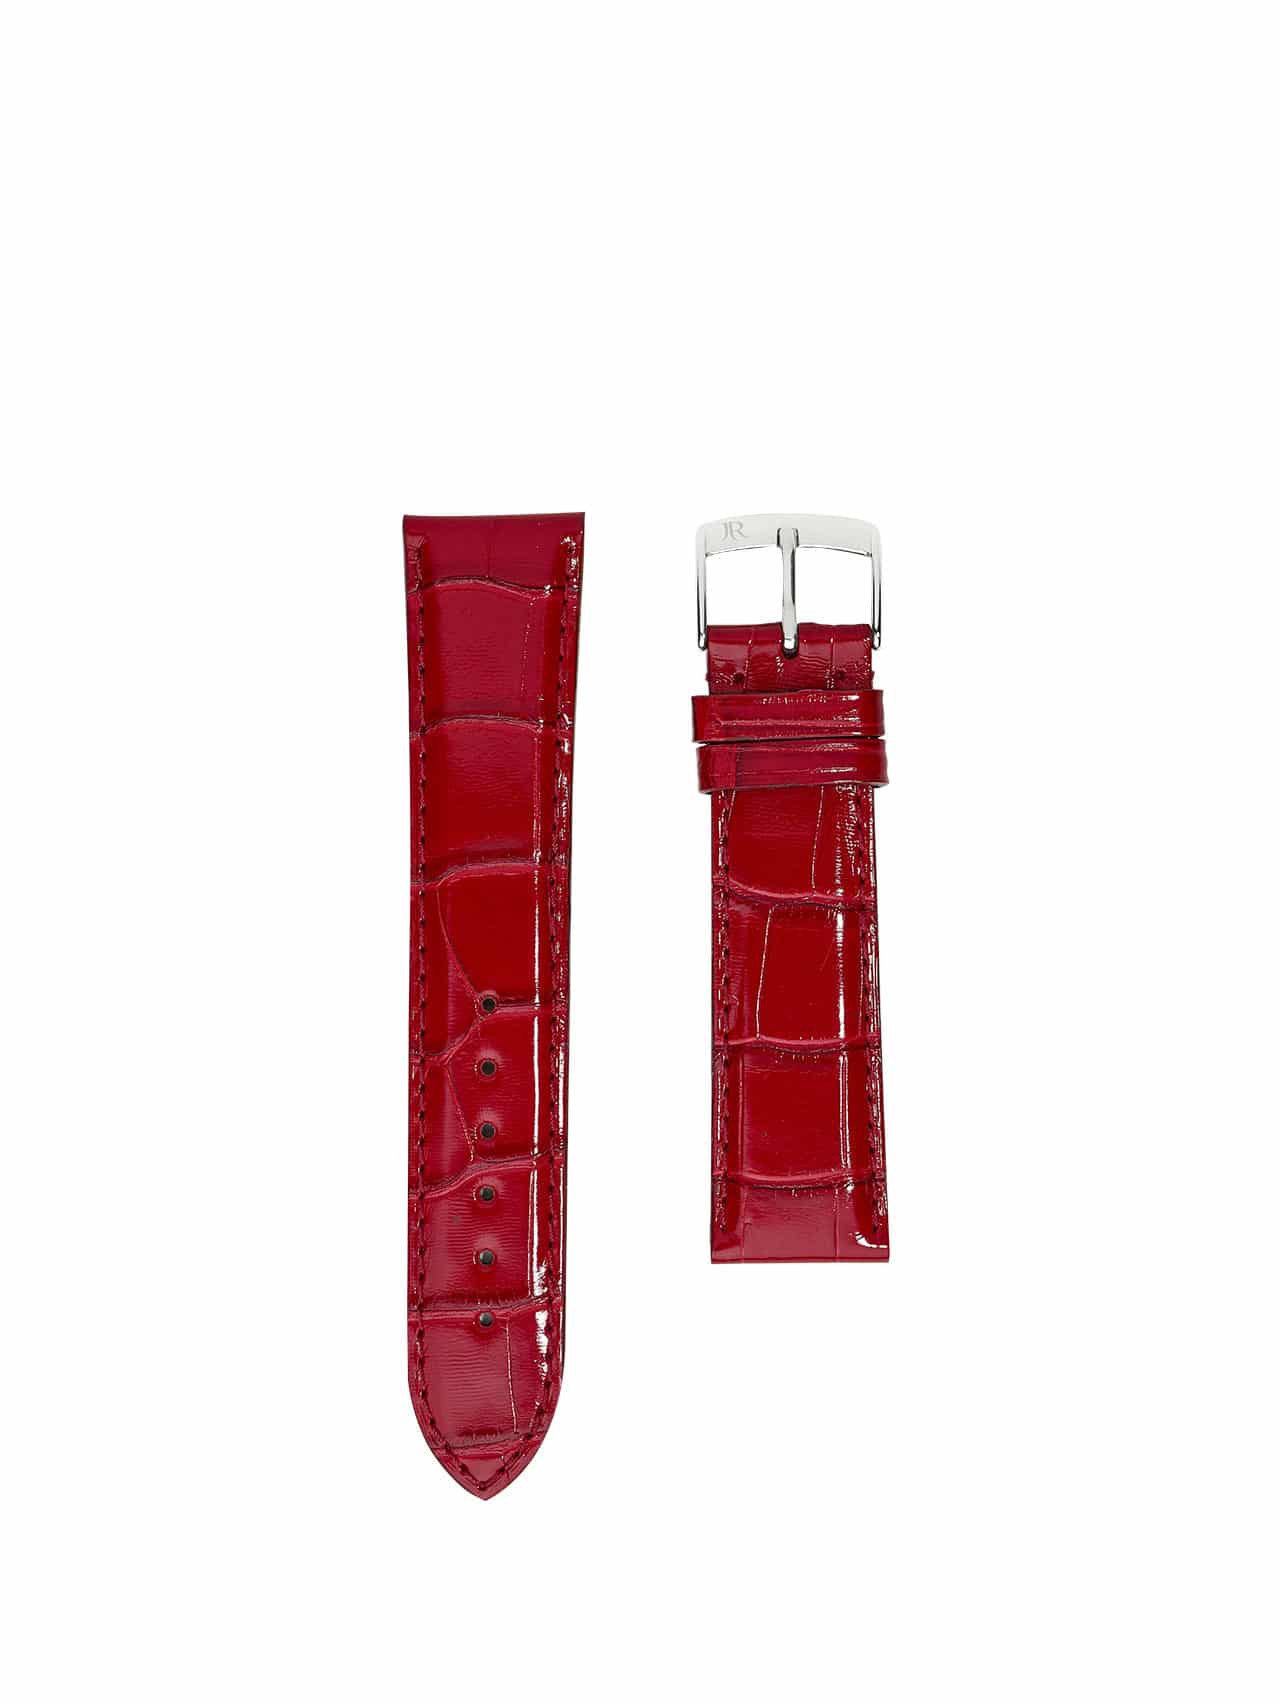 jean rousseau watch straps leather crocodile red